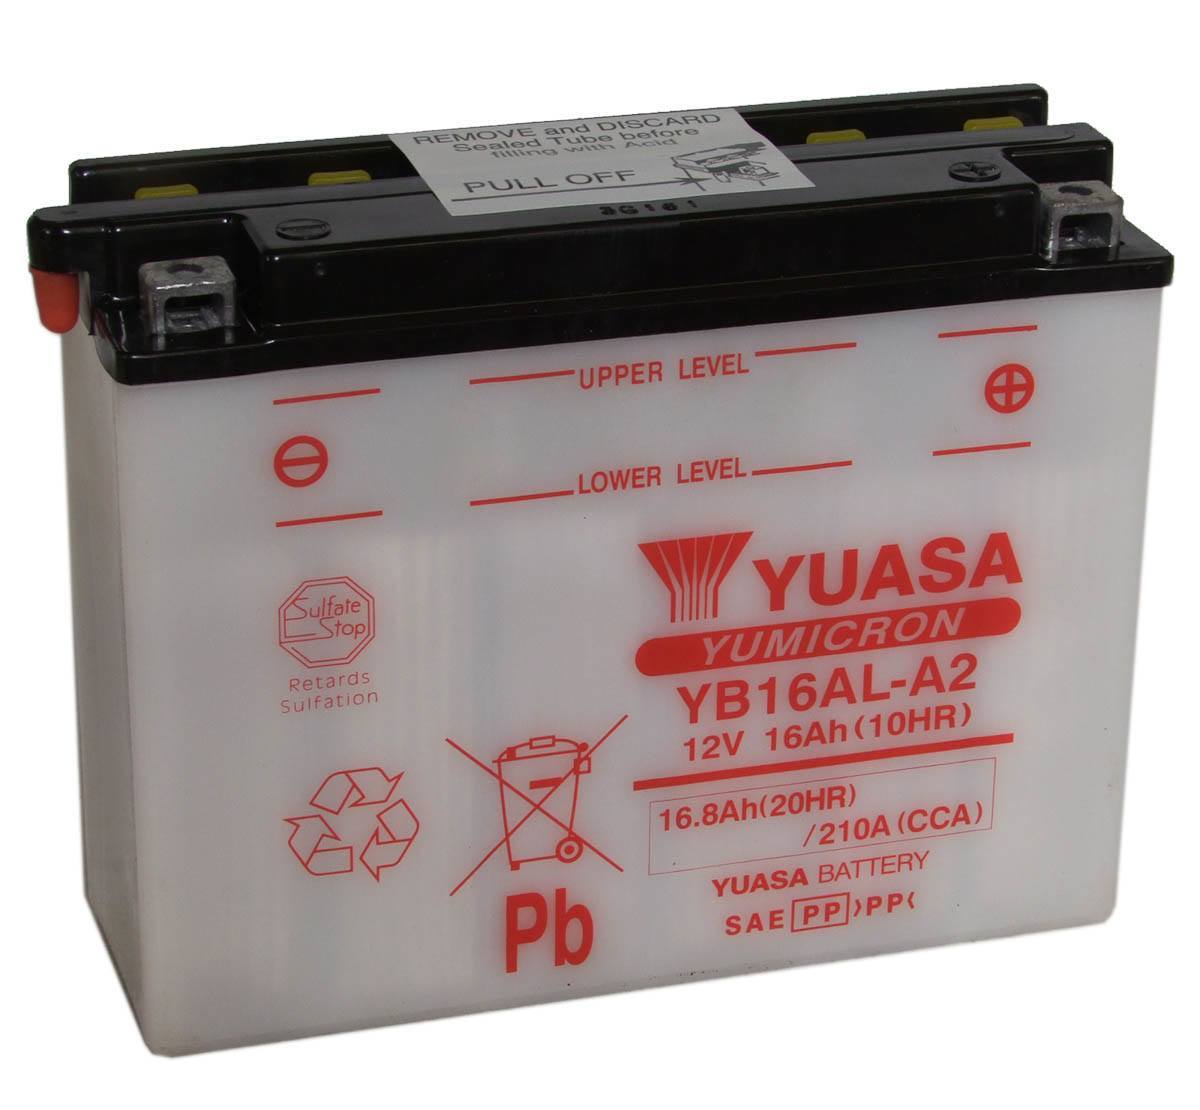 Yuasa YB16AL-A2 12V 16Ah Motorbike Battery